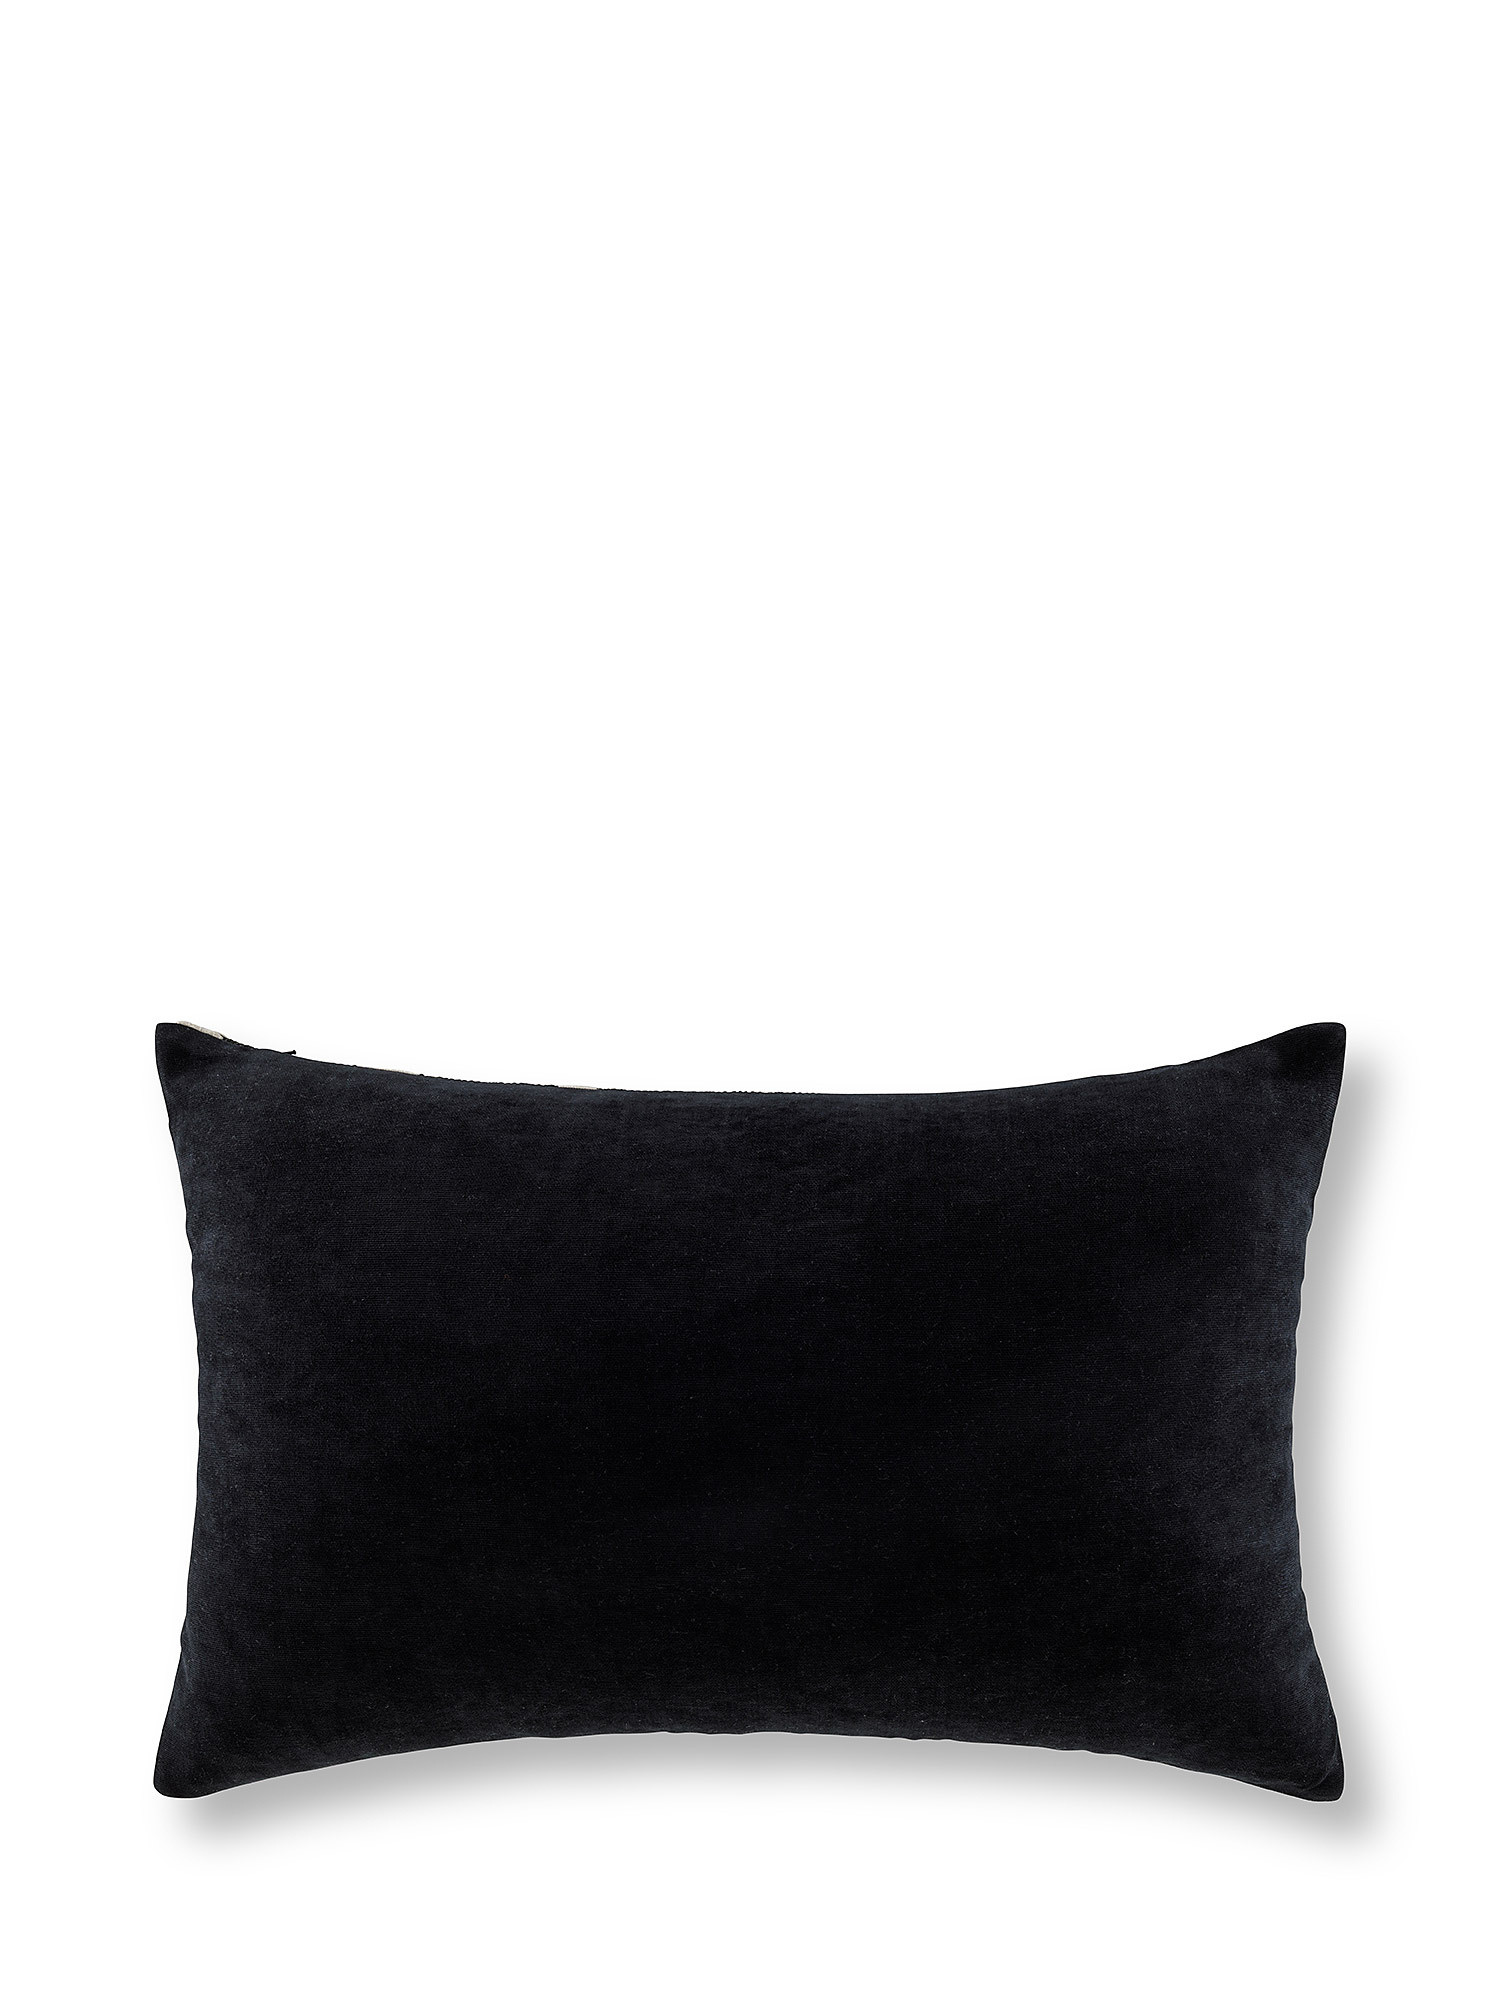 Jacquard cushion with geometric pattern 35x55cm, Black, large image number 1